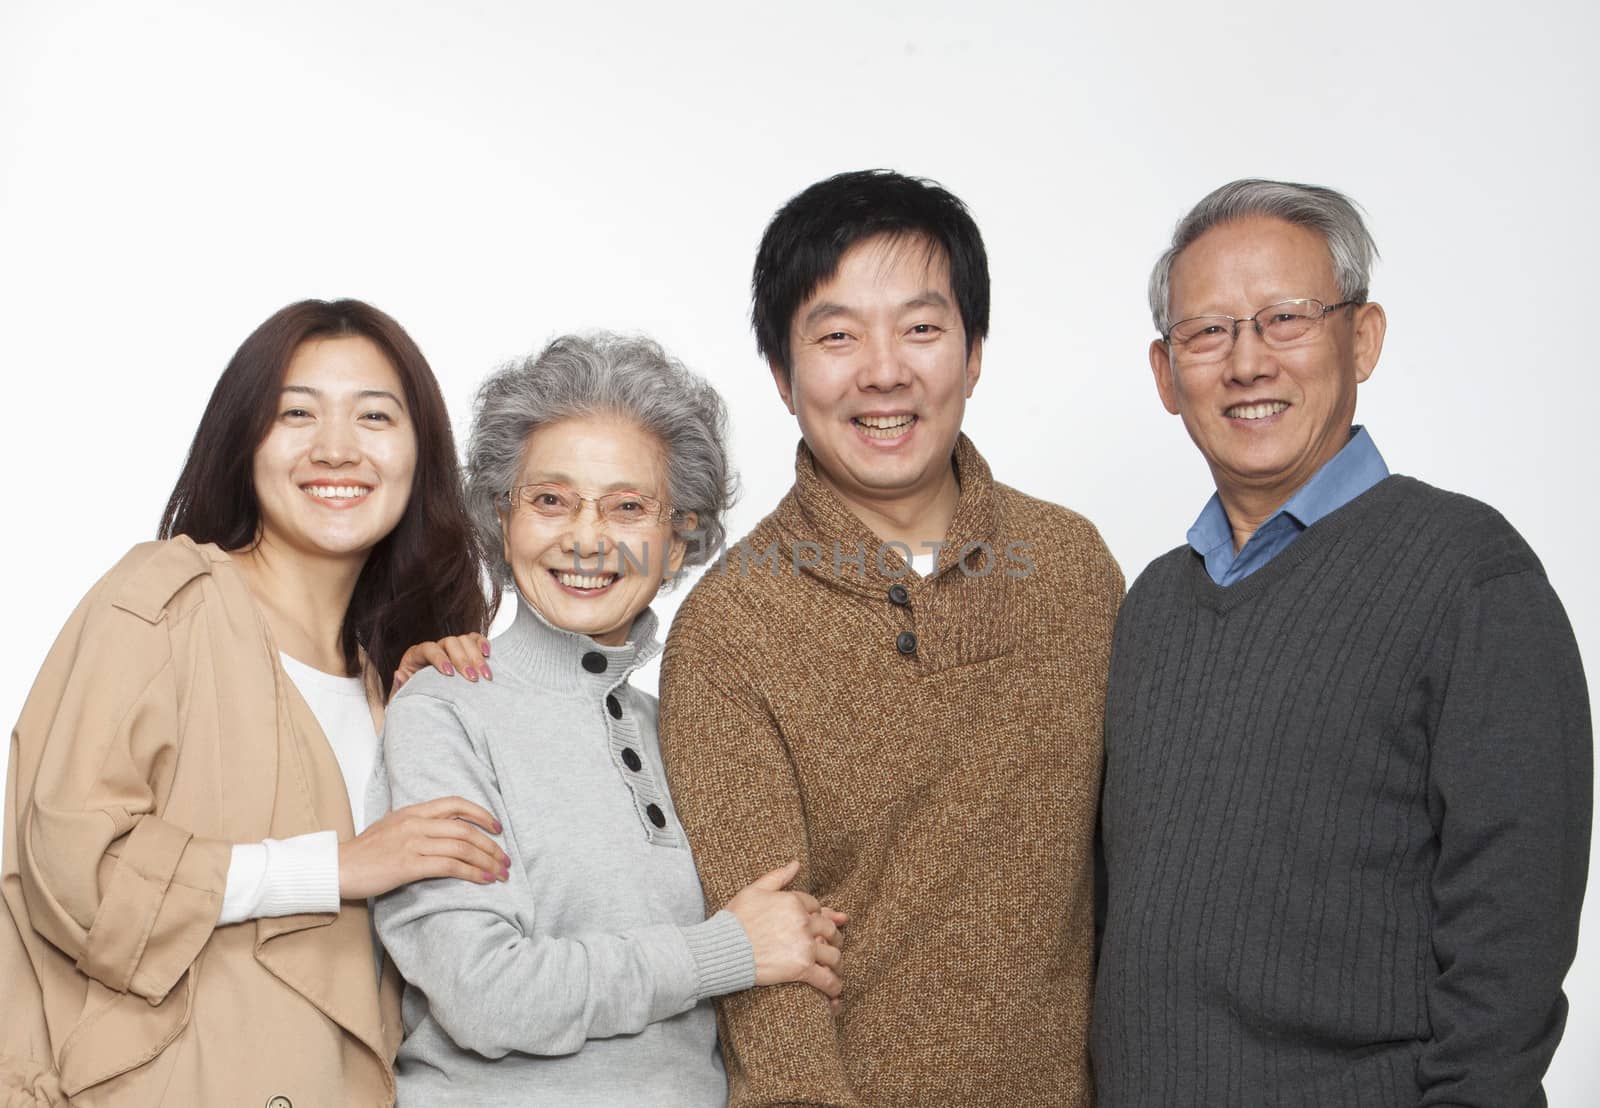 Multi generation family portrait